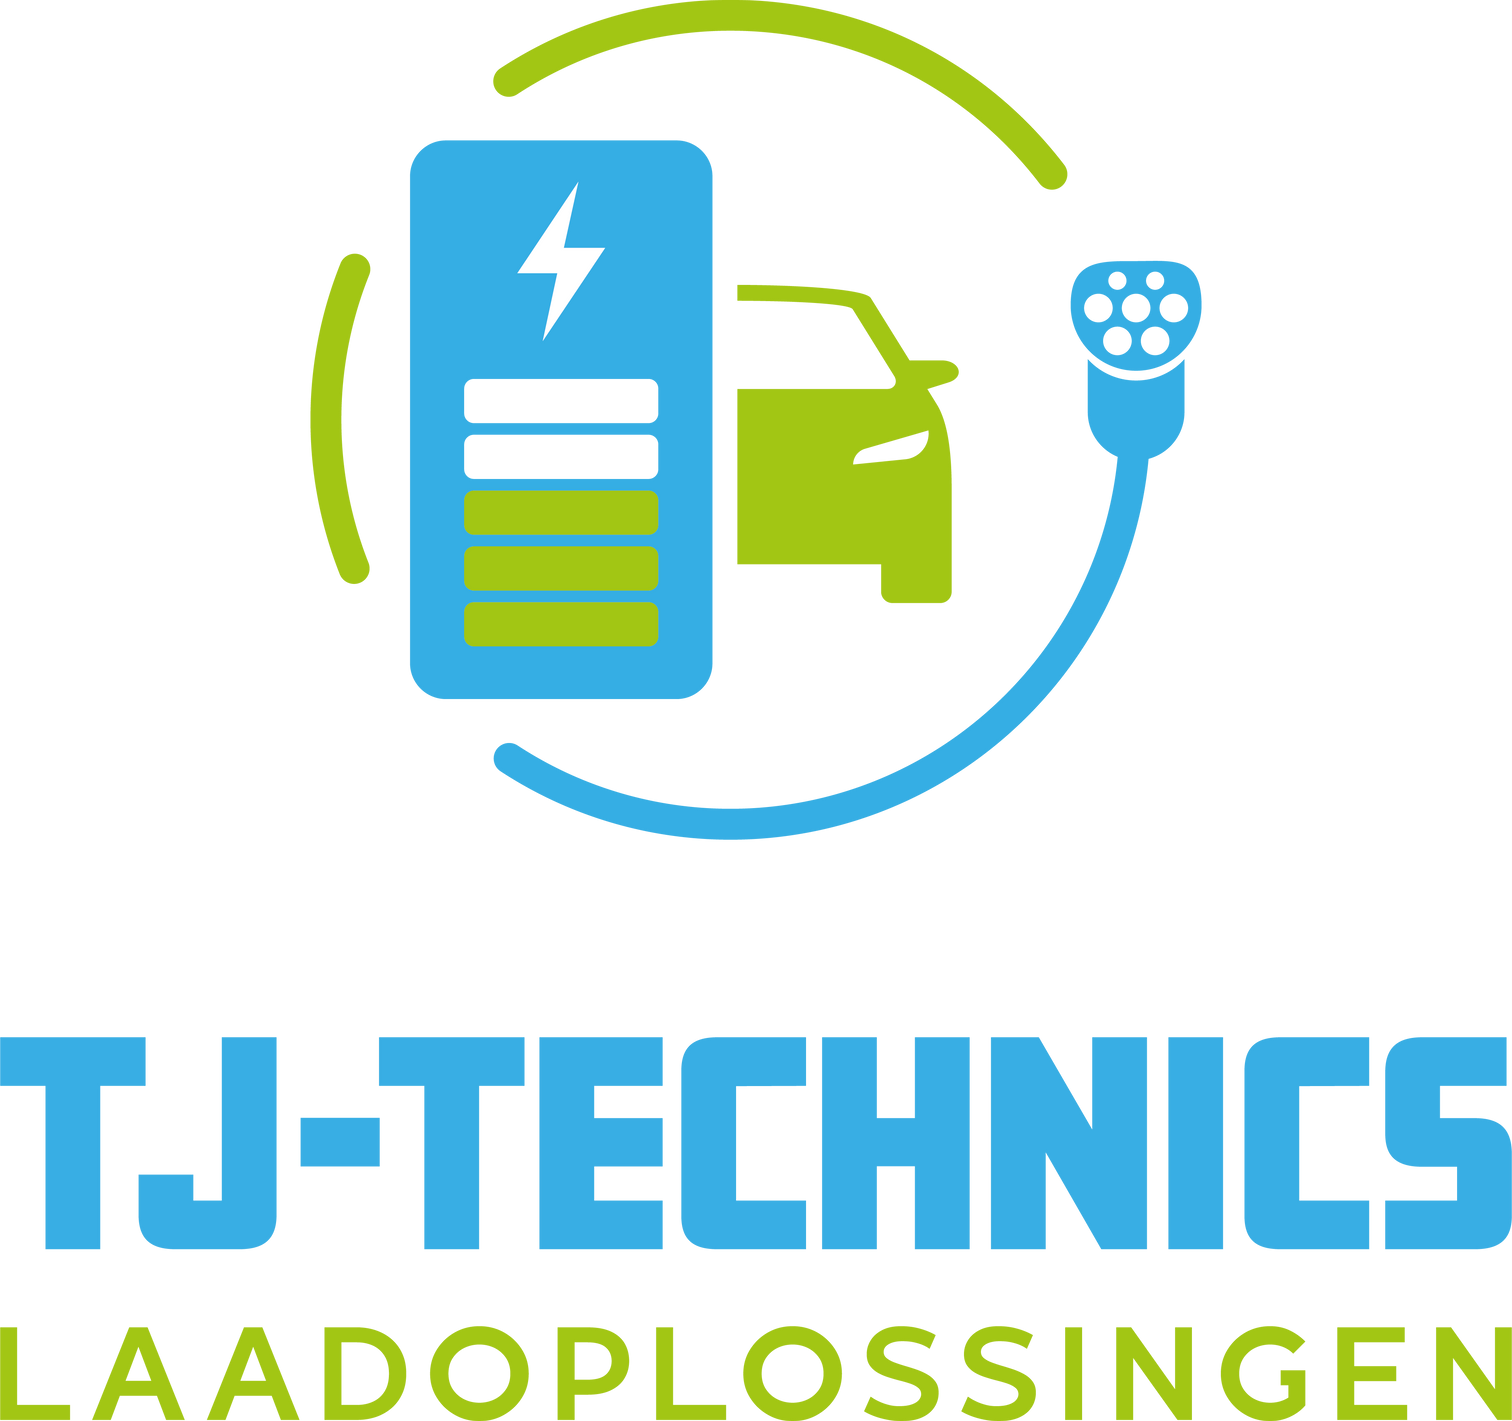 TJ-Technics bv logo